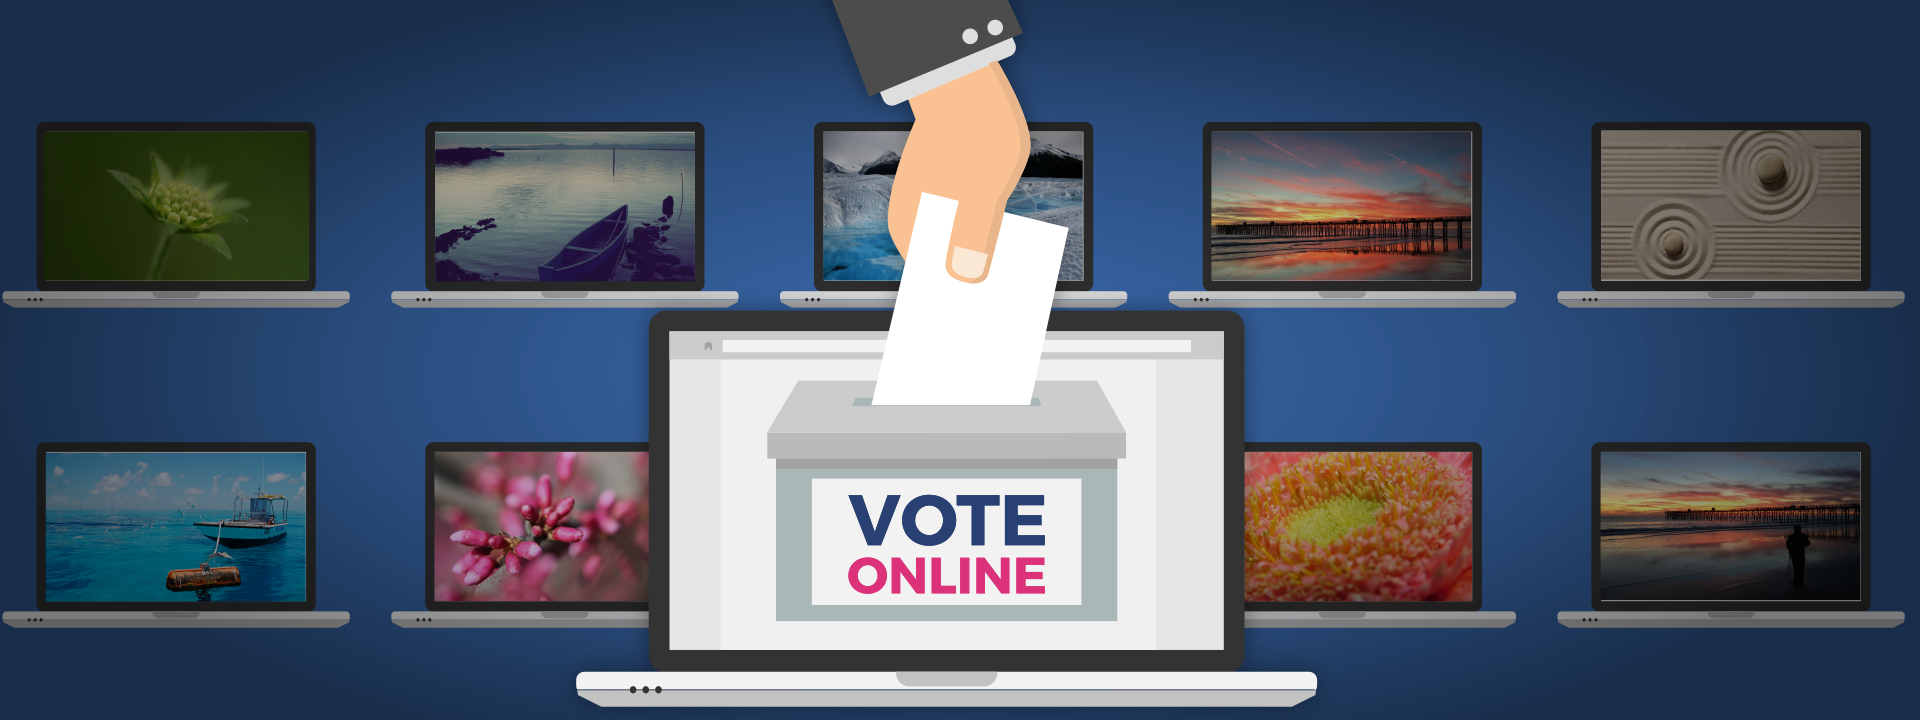 Fedora 24 Wallpaper: Vote now!